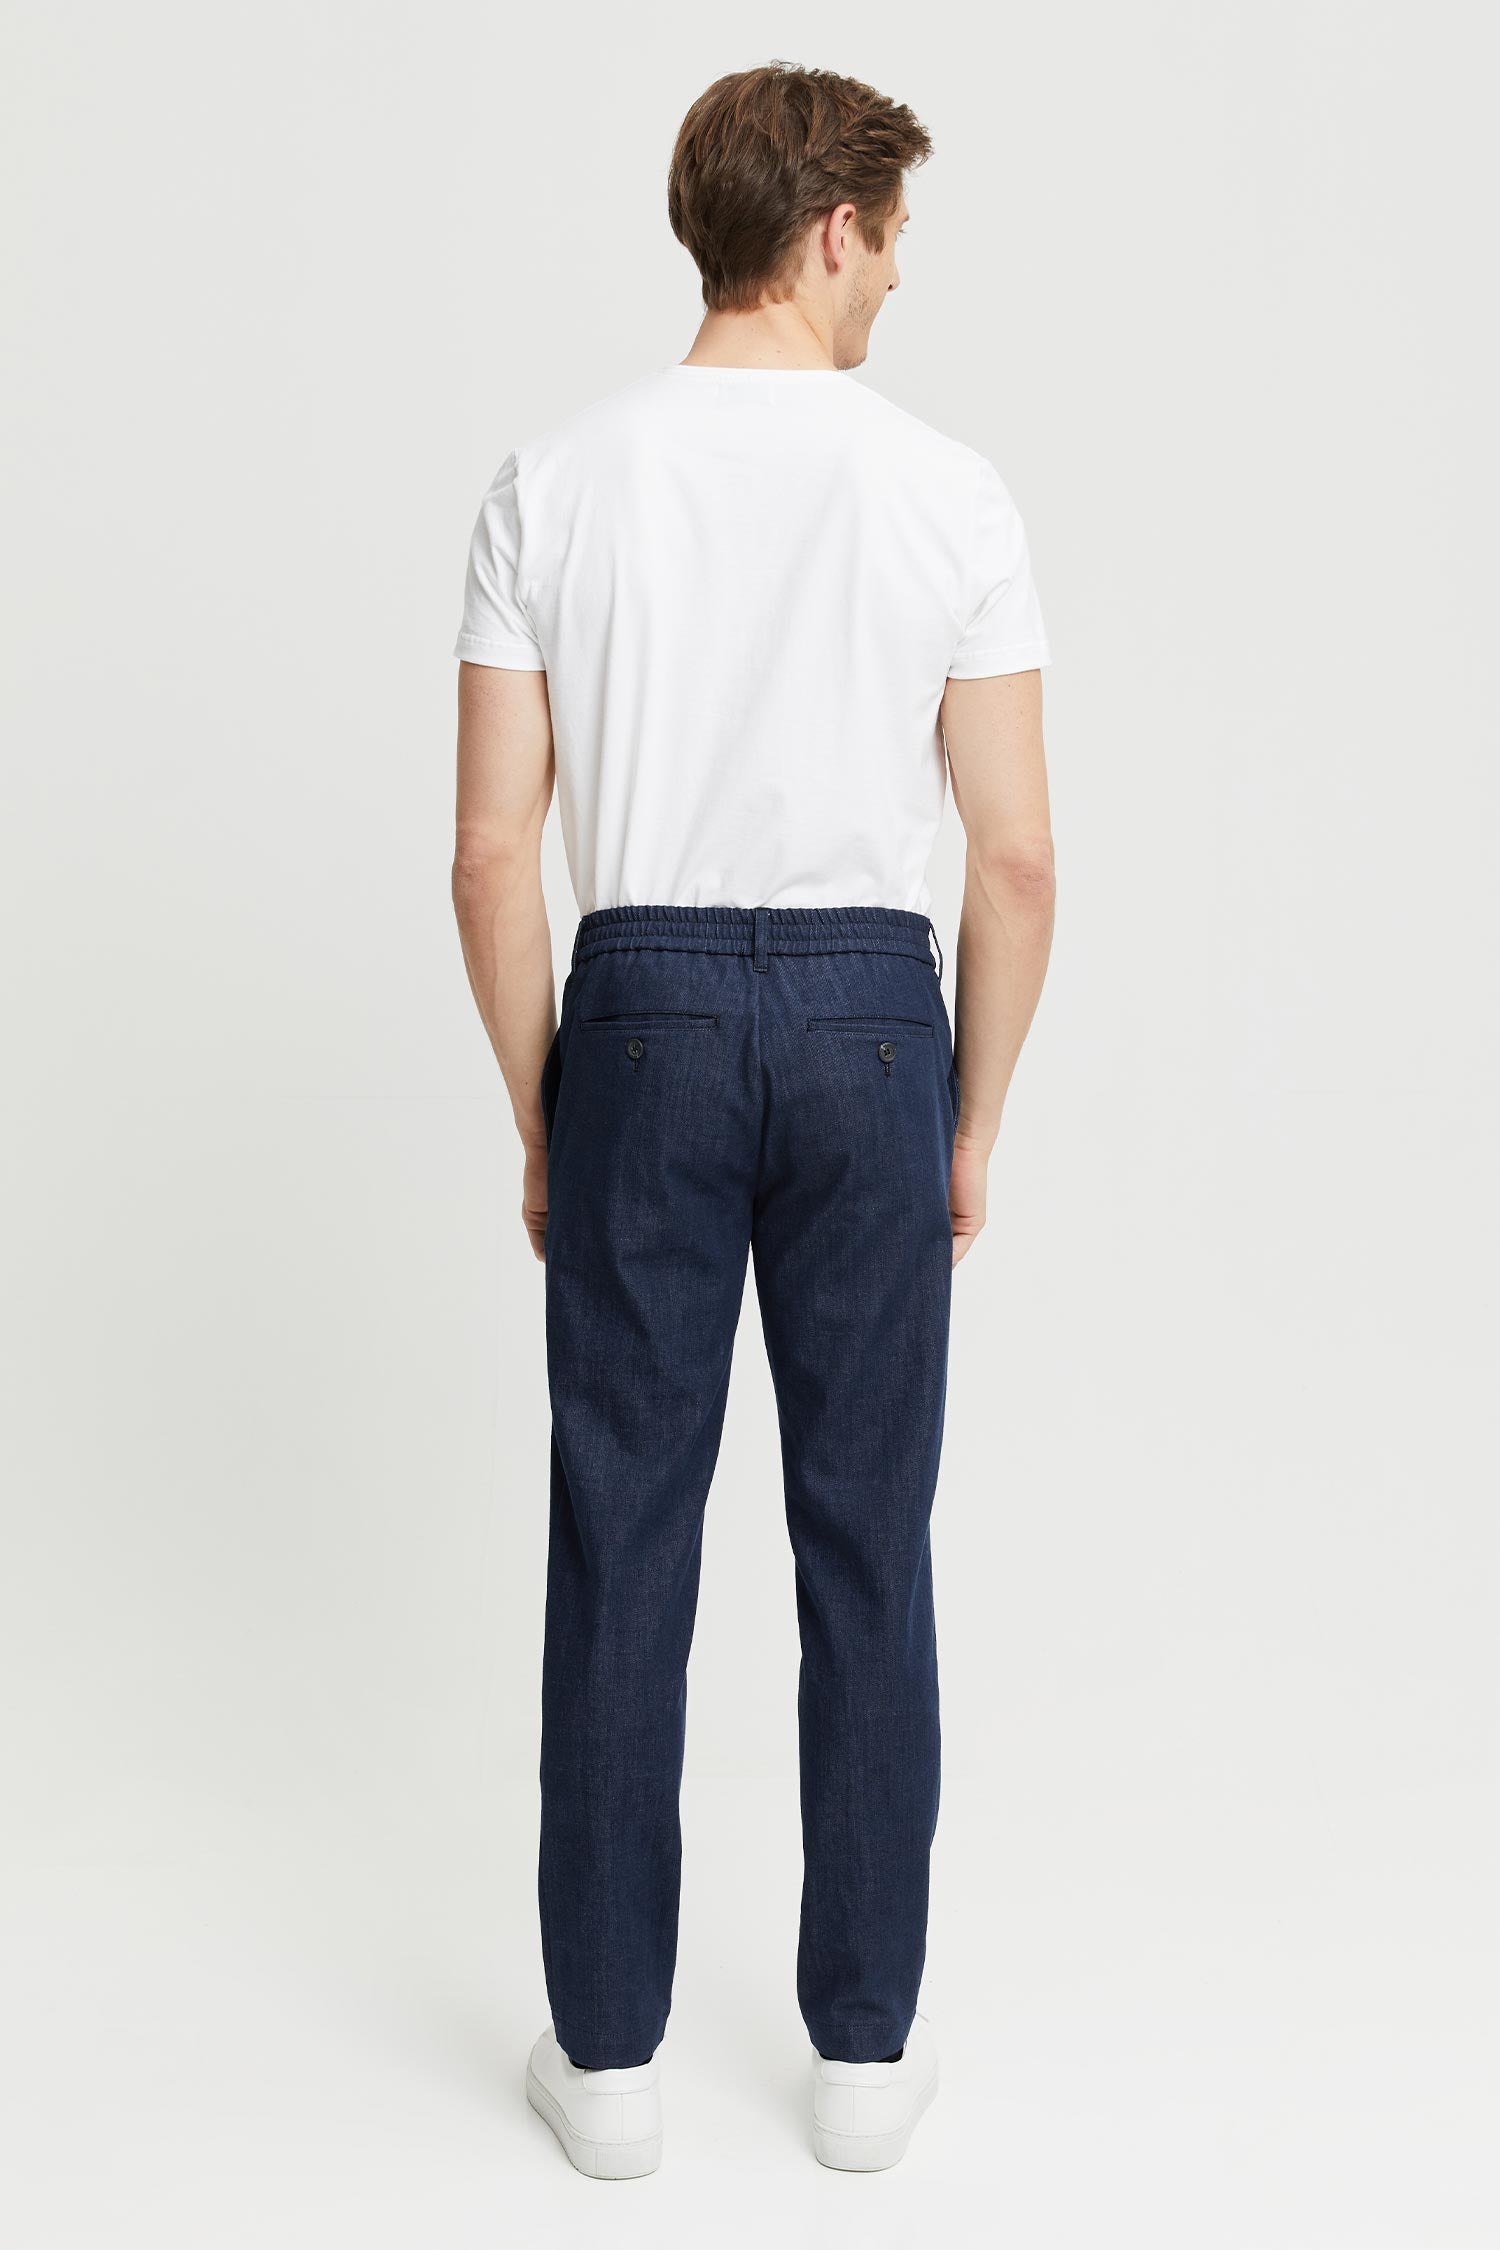 Frenn Seppo premium quality sustainable GOTS organic cotton denim trousers indigo blue